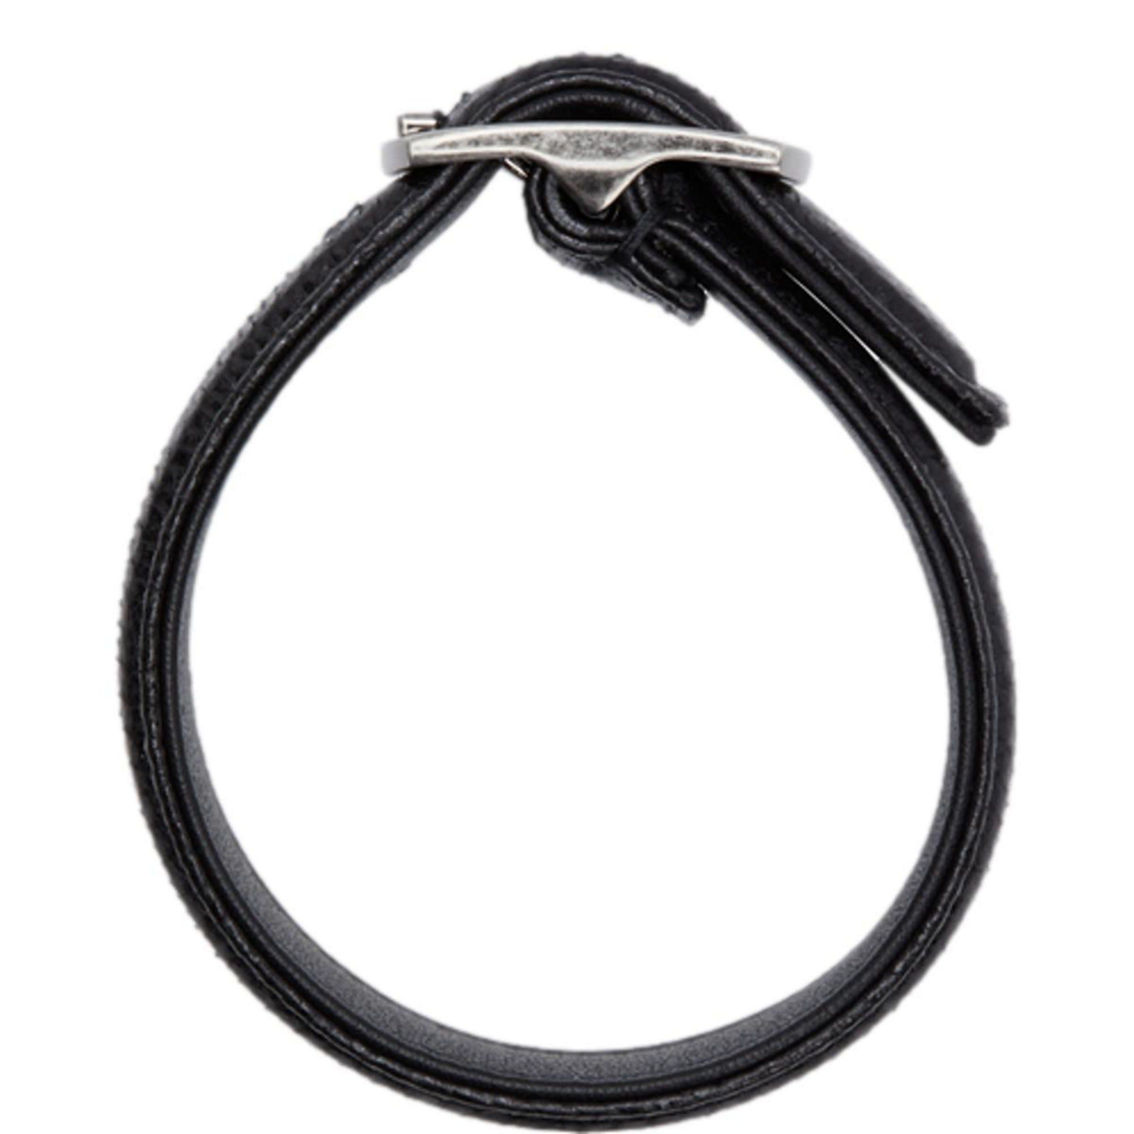 Saint Laurent Black Leather Snake Embossed Buckle Bracelet (New) - Image 4 of 4